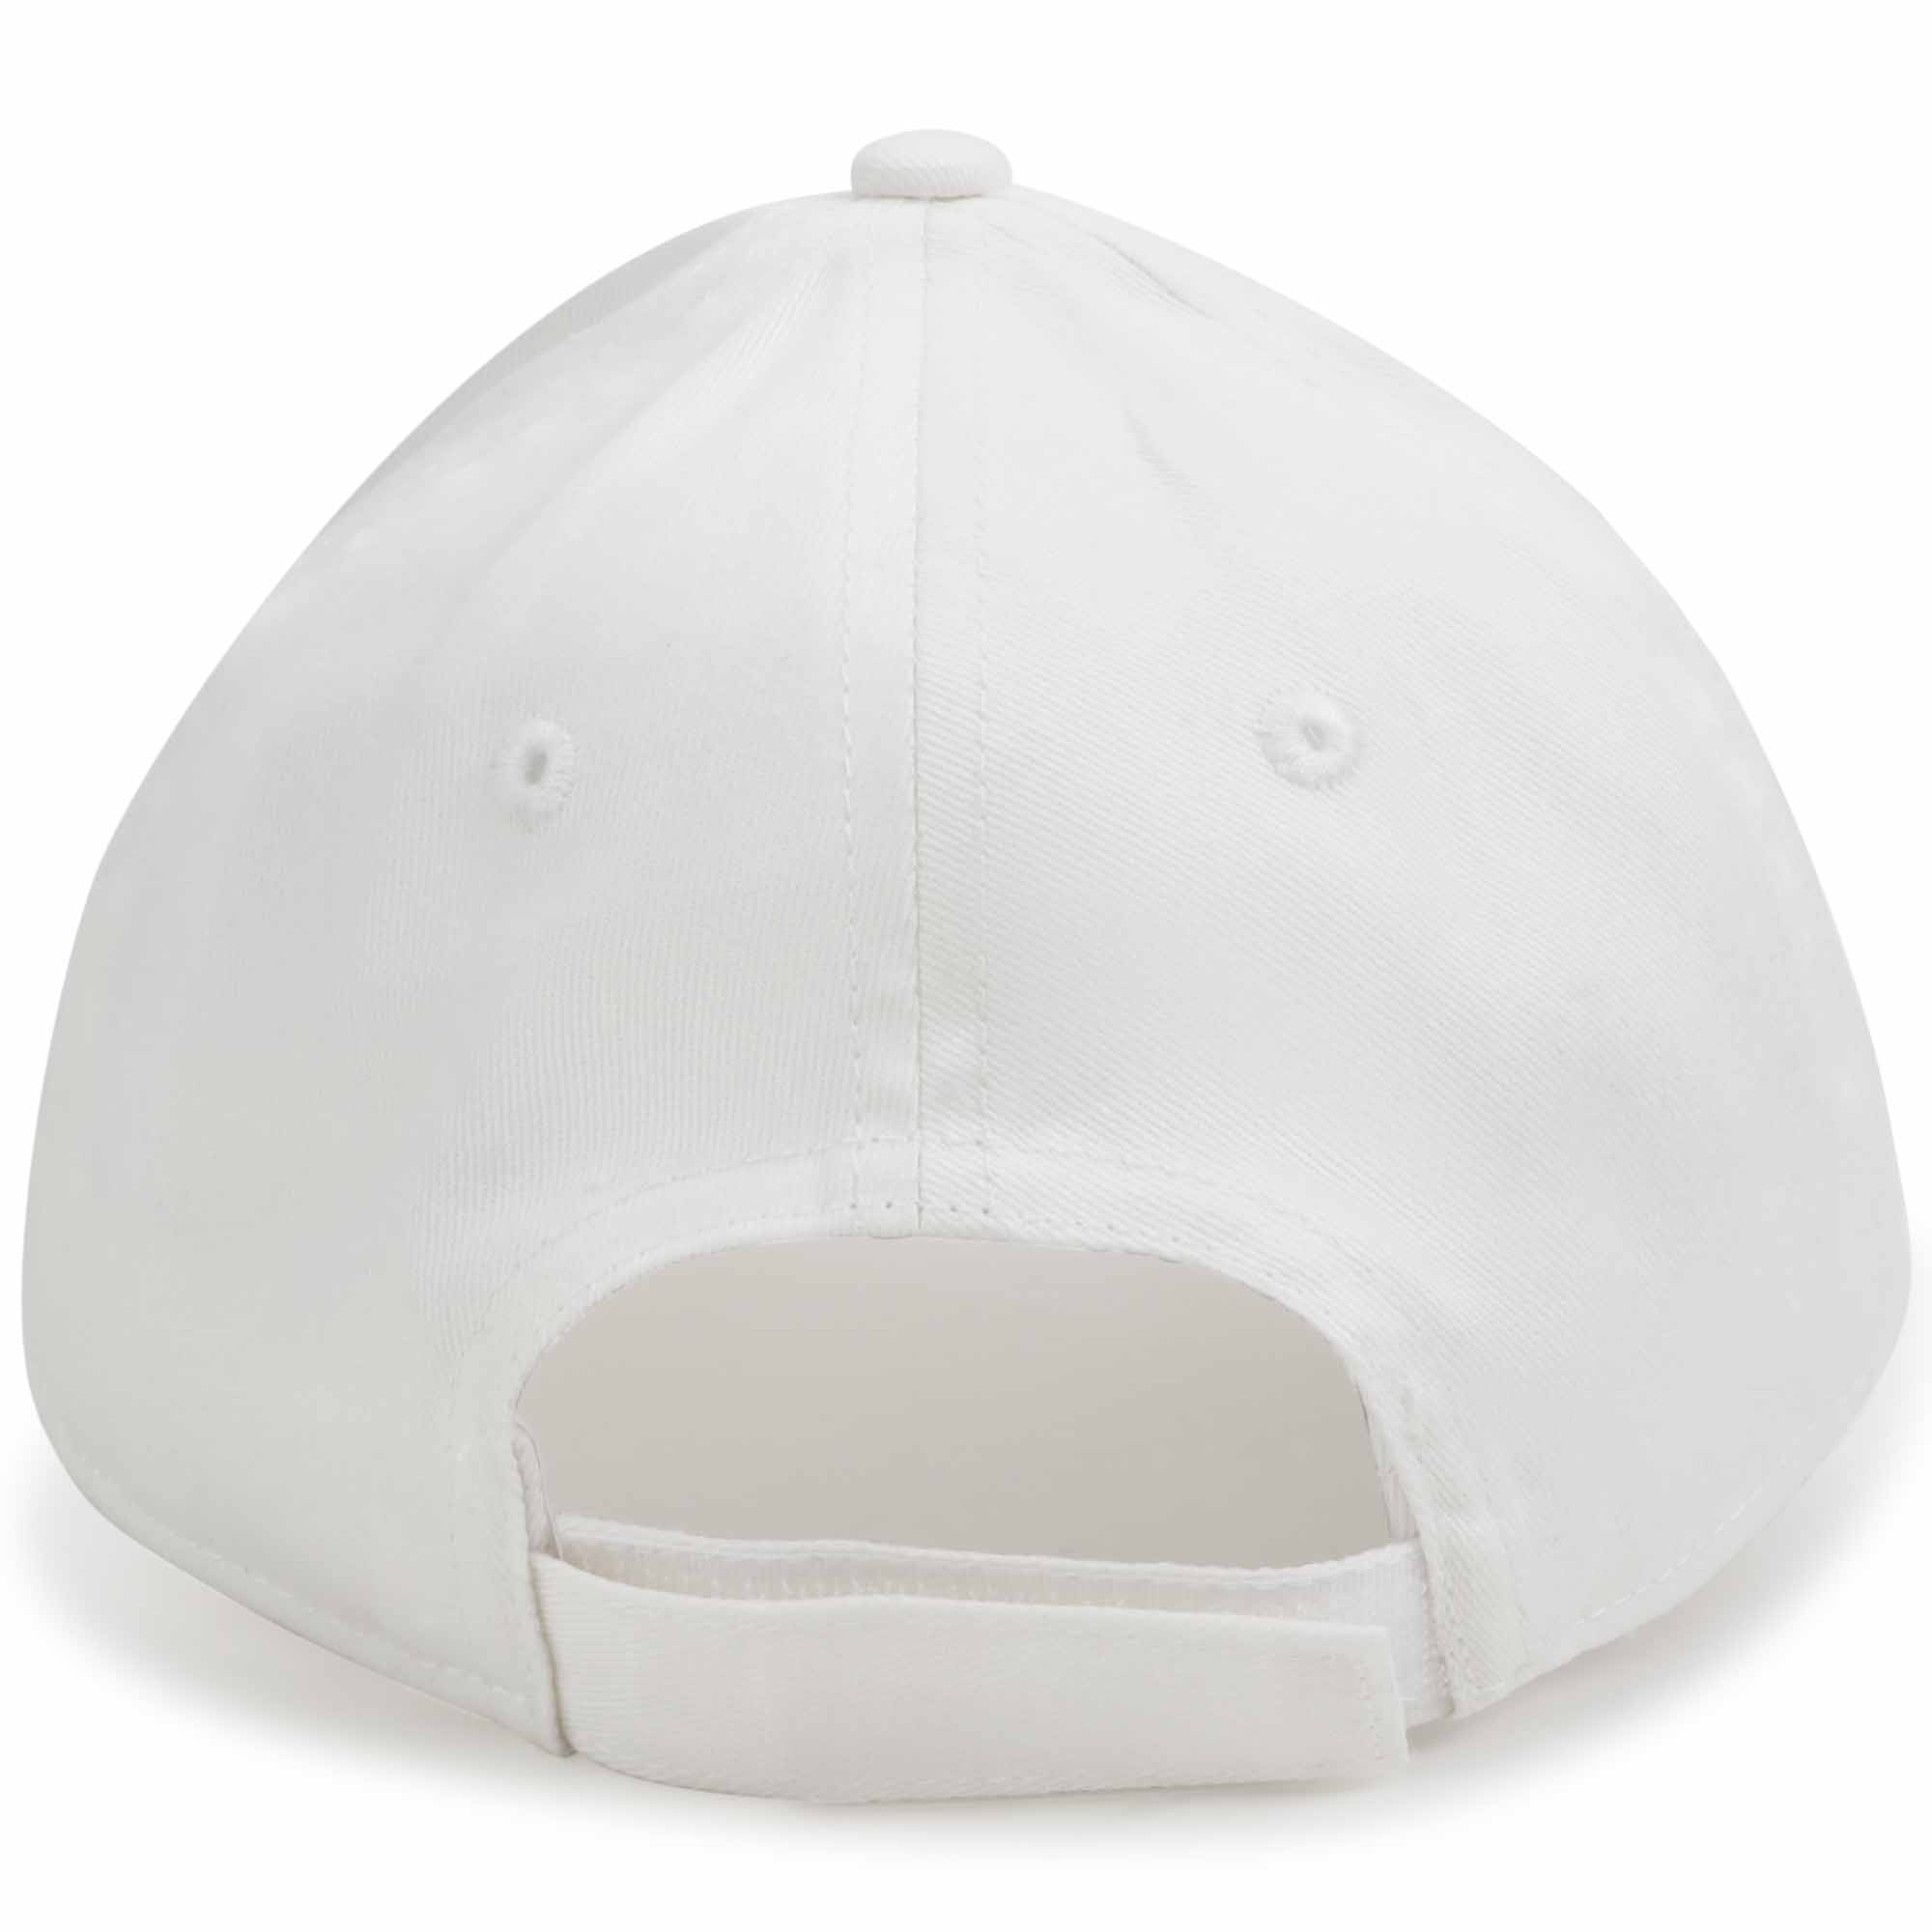 Cappellino tela di cotone logo MICHAEL KORS Per BAMBINA